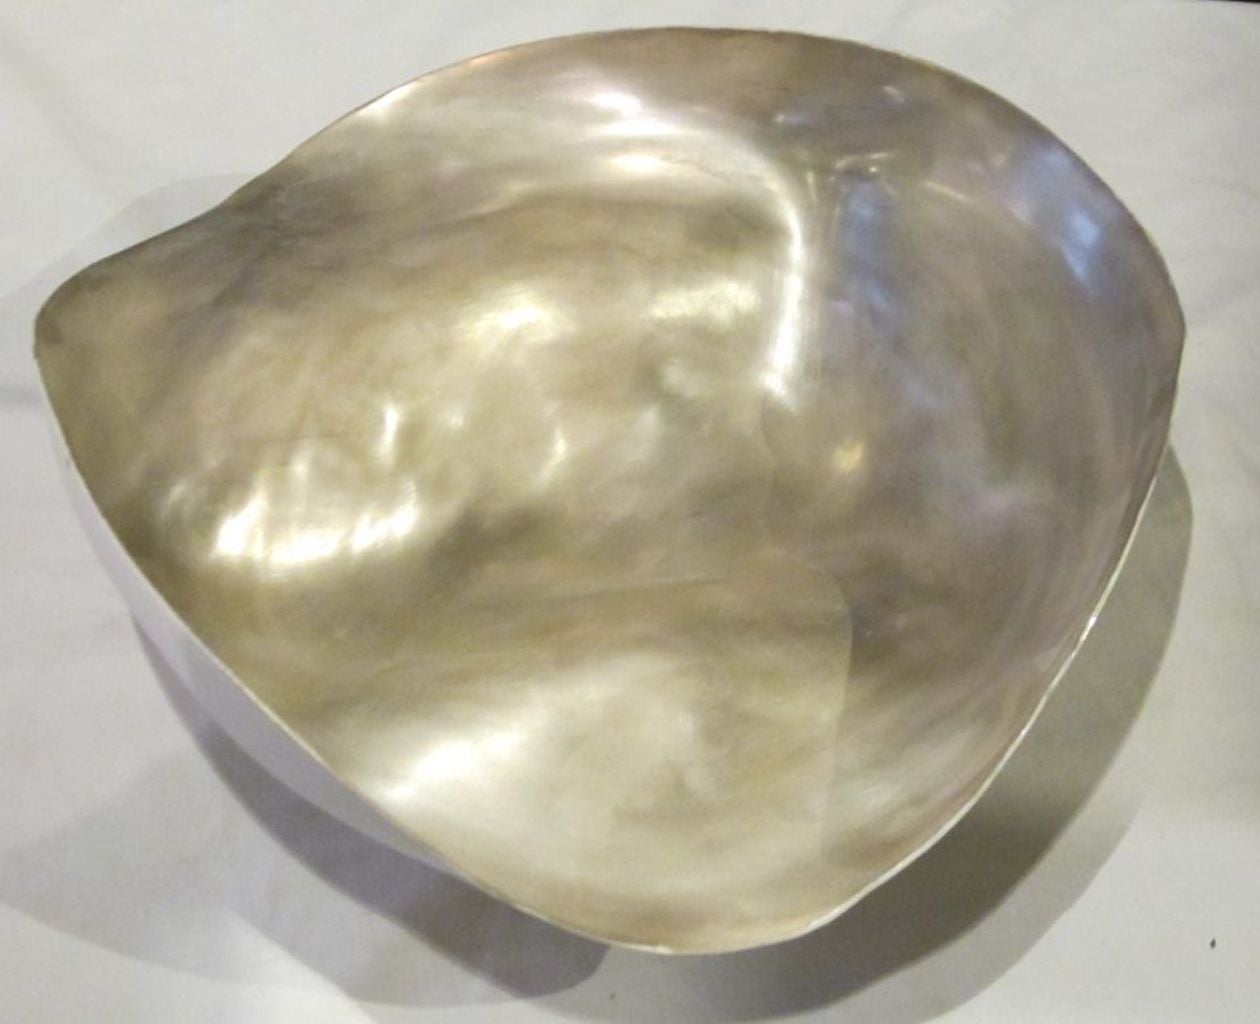 Italian handmade medium silver leaf bowl in a freeform shape.
Silver leaf on cream fine ceramic.
Similar bowls are available in 7